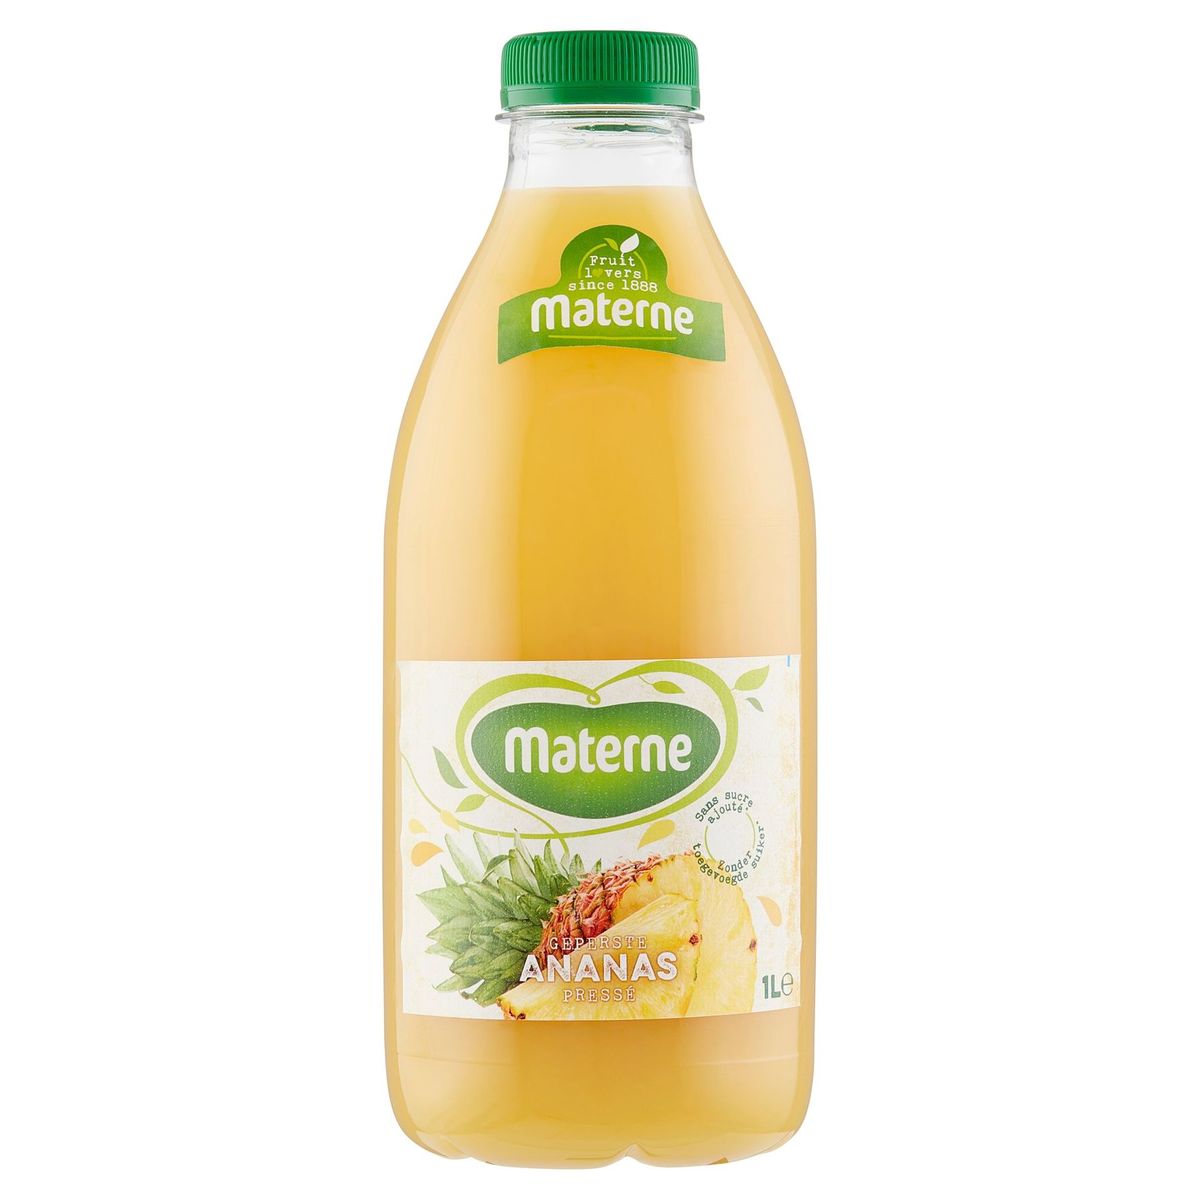 Materne Geperste Ananas 1 L